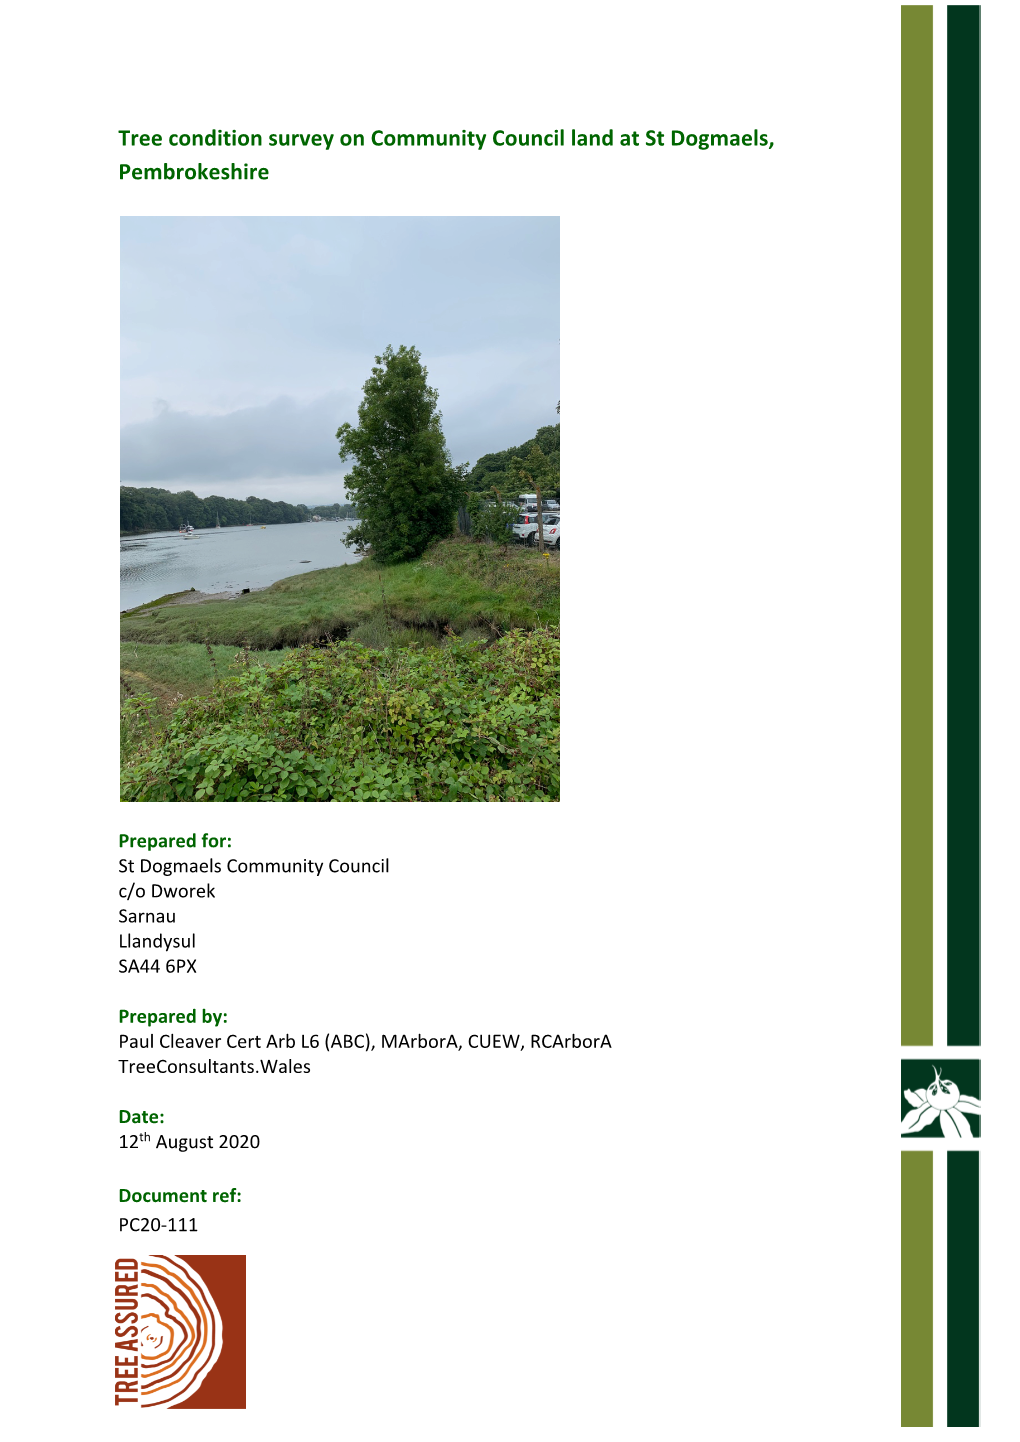 PC20-111 Tree Condition Survey